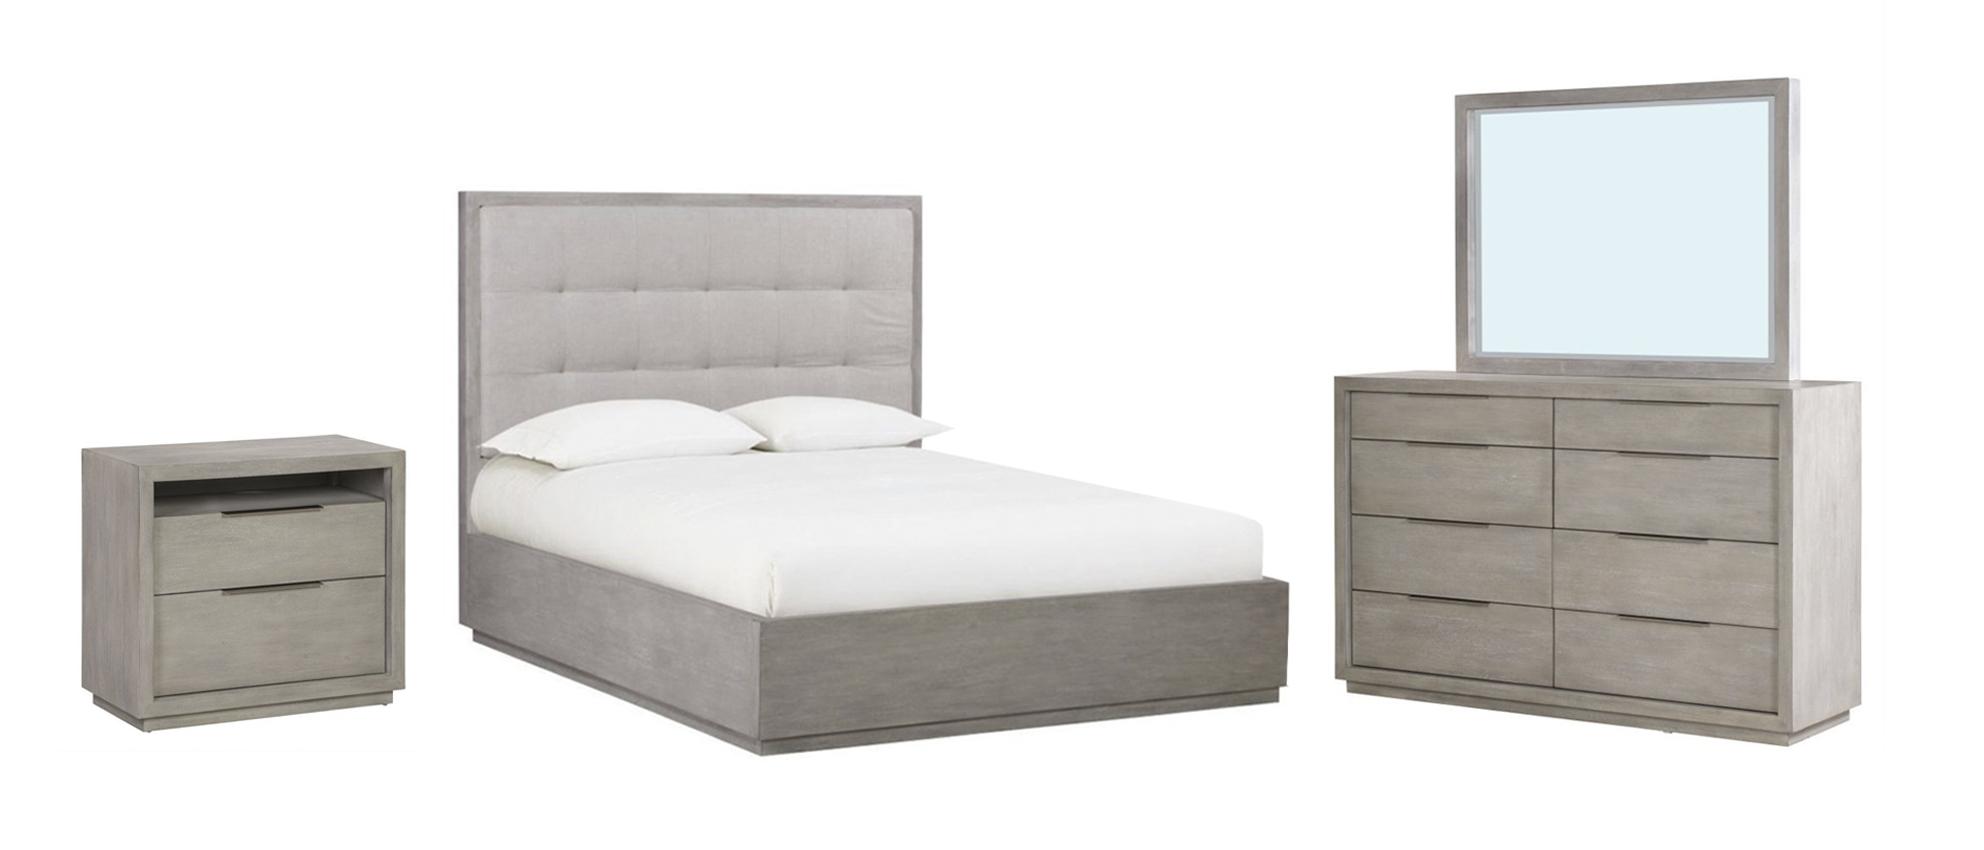 Contemporary Platform Bedroom Set OXFORD AZBXF7-NDM-4PC in Light Gray, Stone Fabric